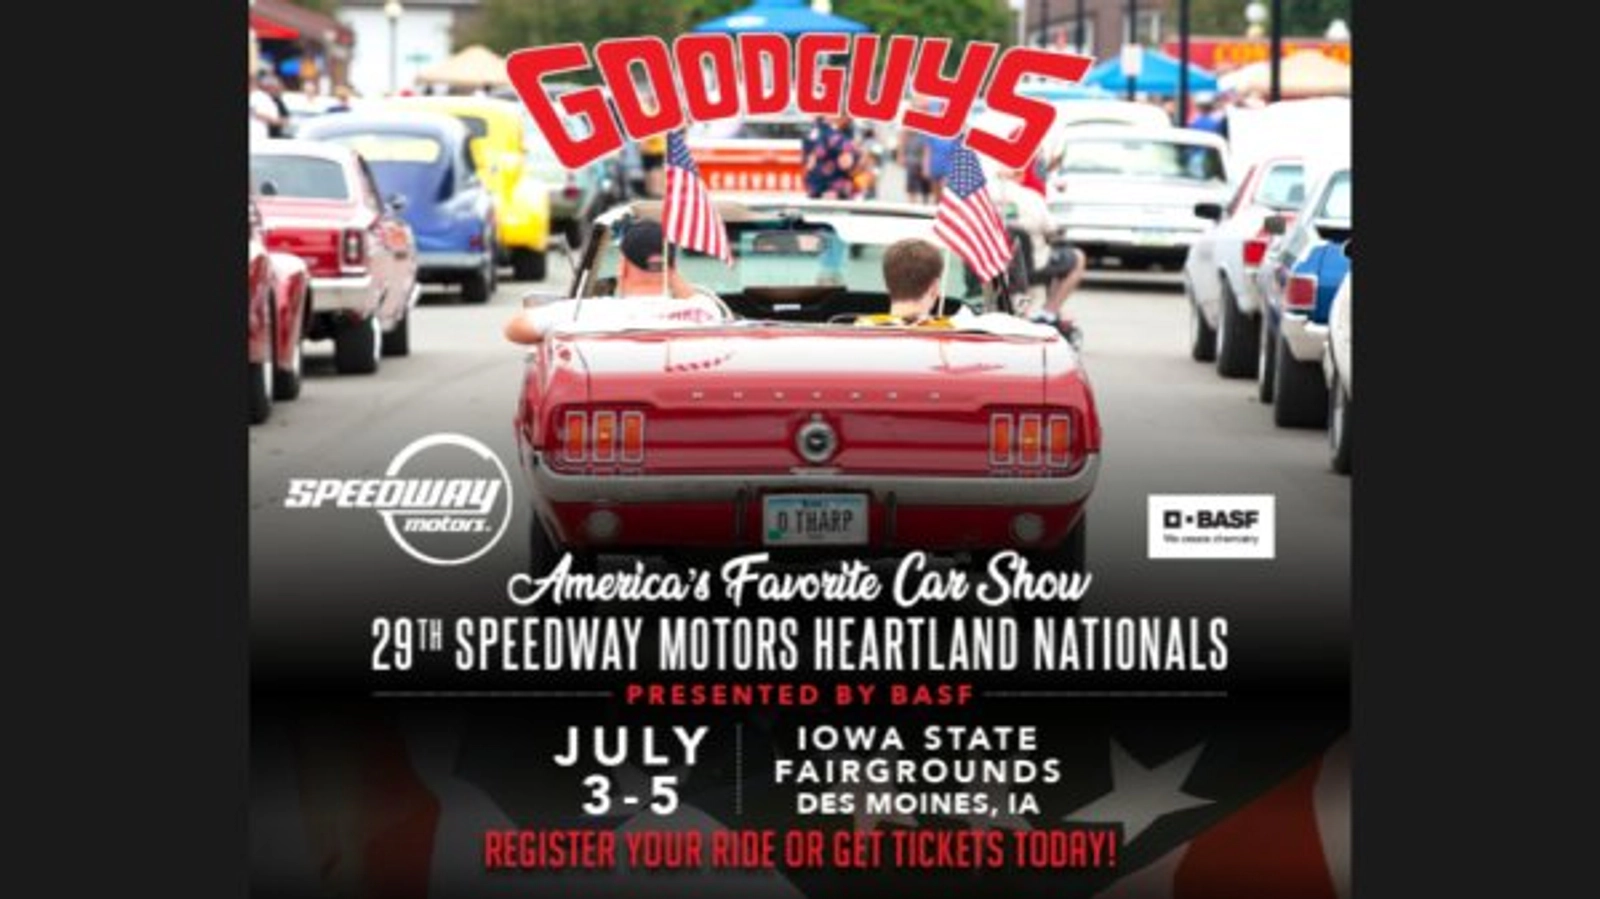 Win Goodguys' 29th Speedway Motors Heartland Nationals Tickets - Thumbnail Image